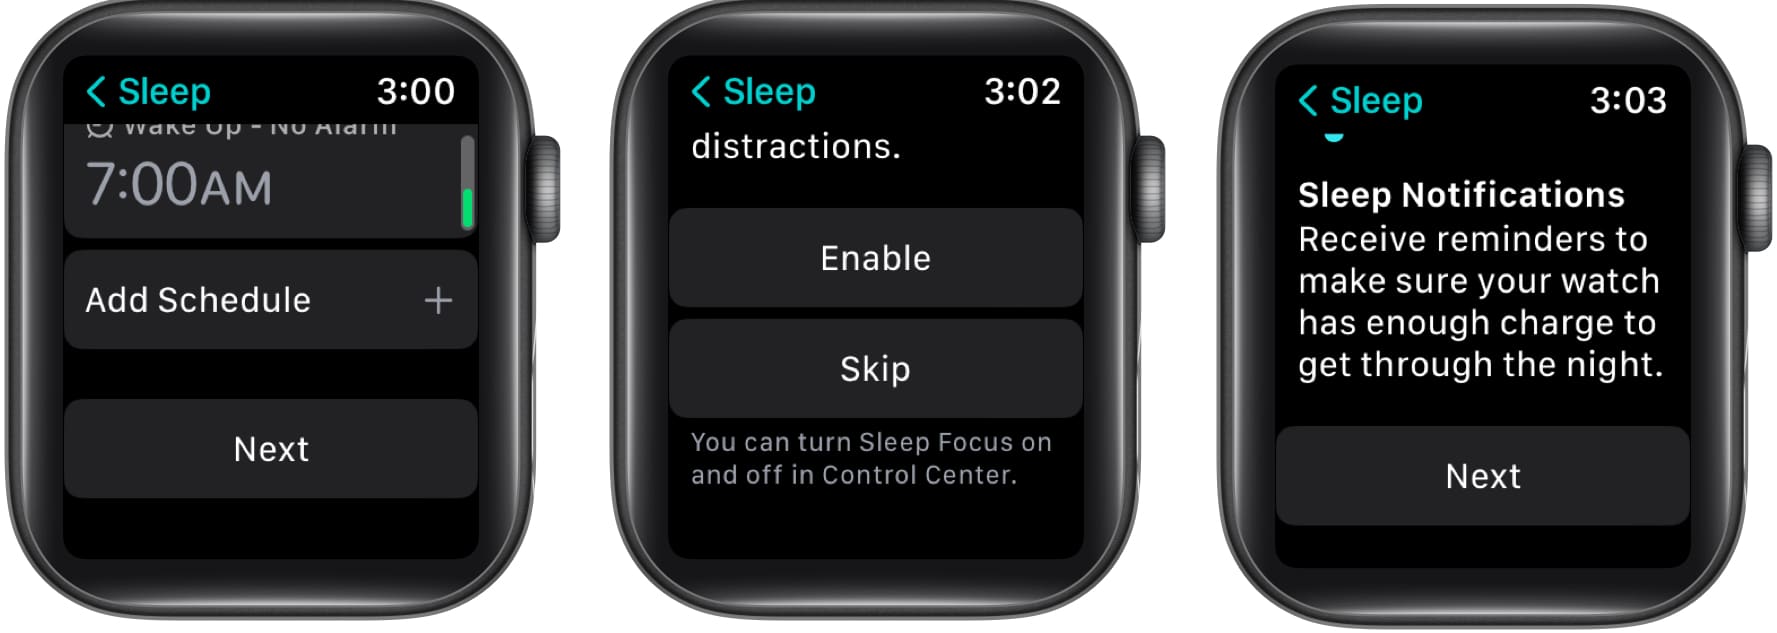 Tap Next in Sleep app on Apple Watch